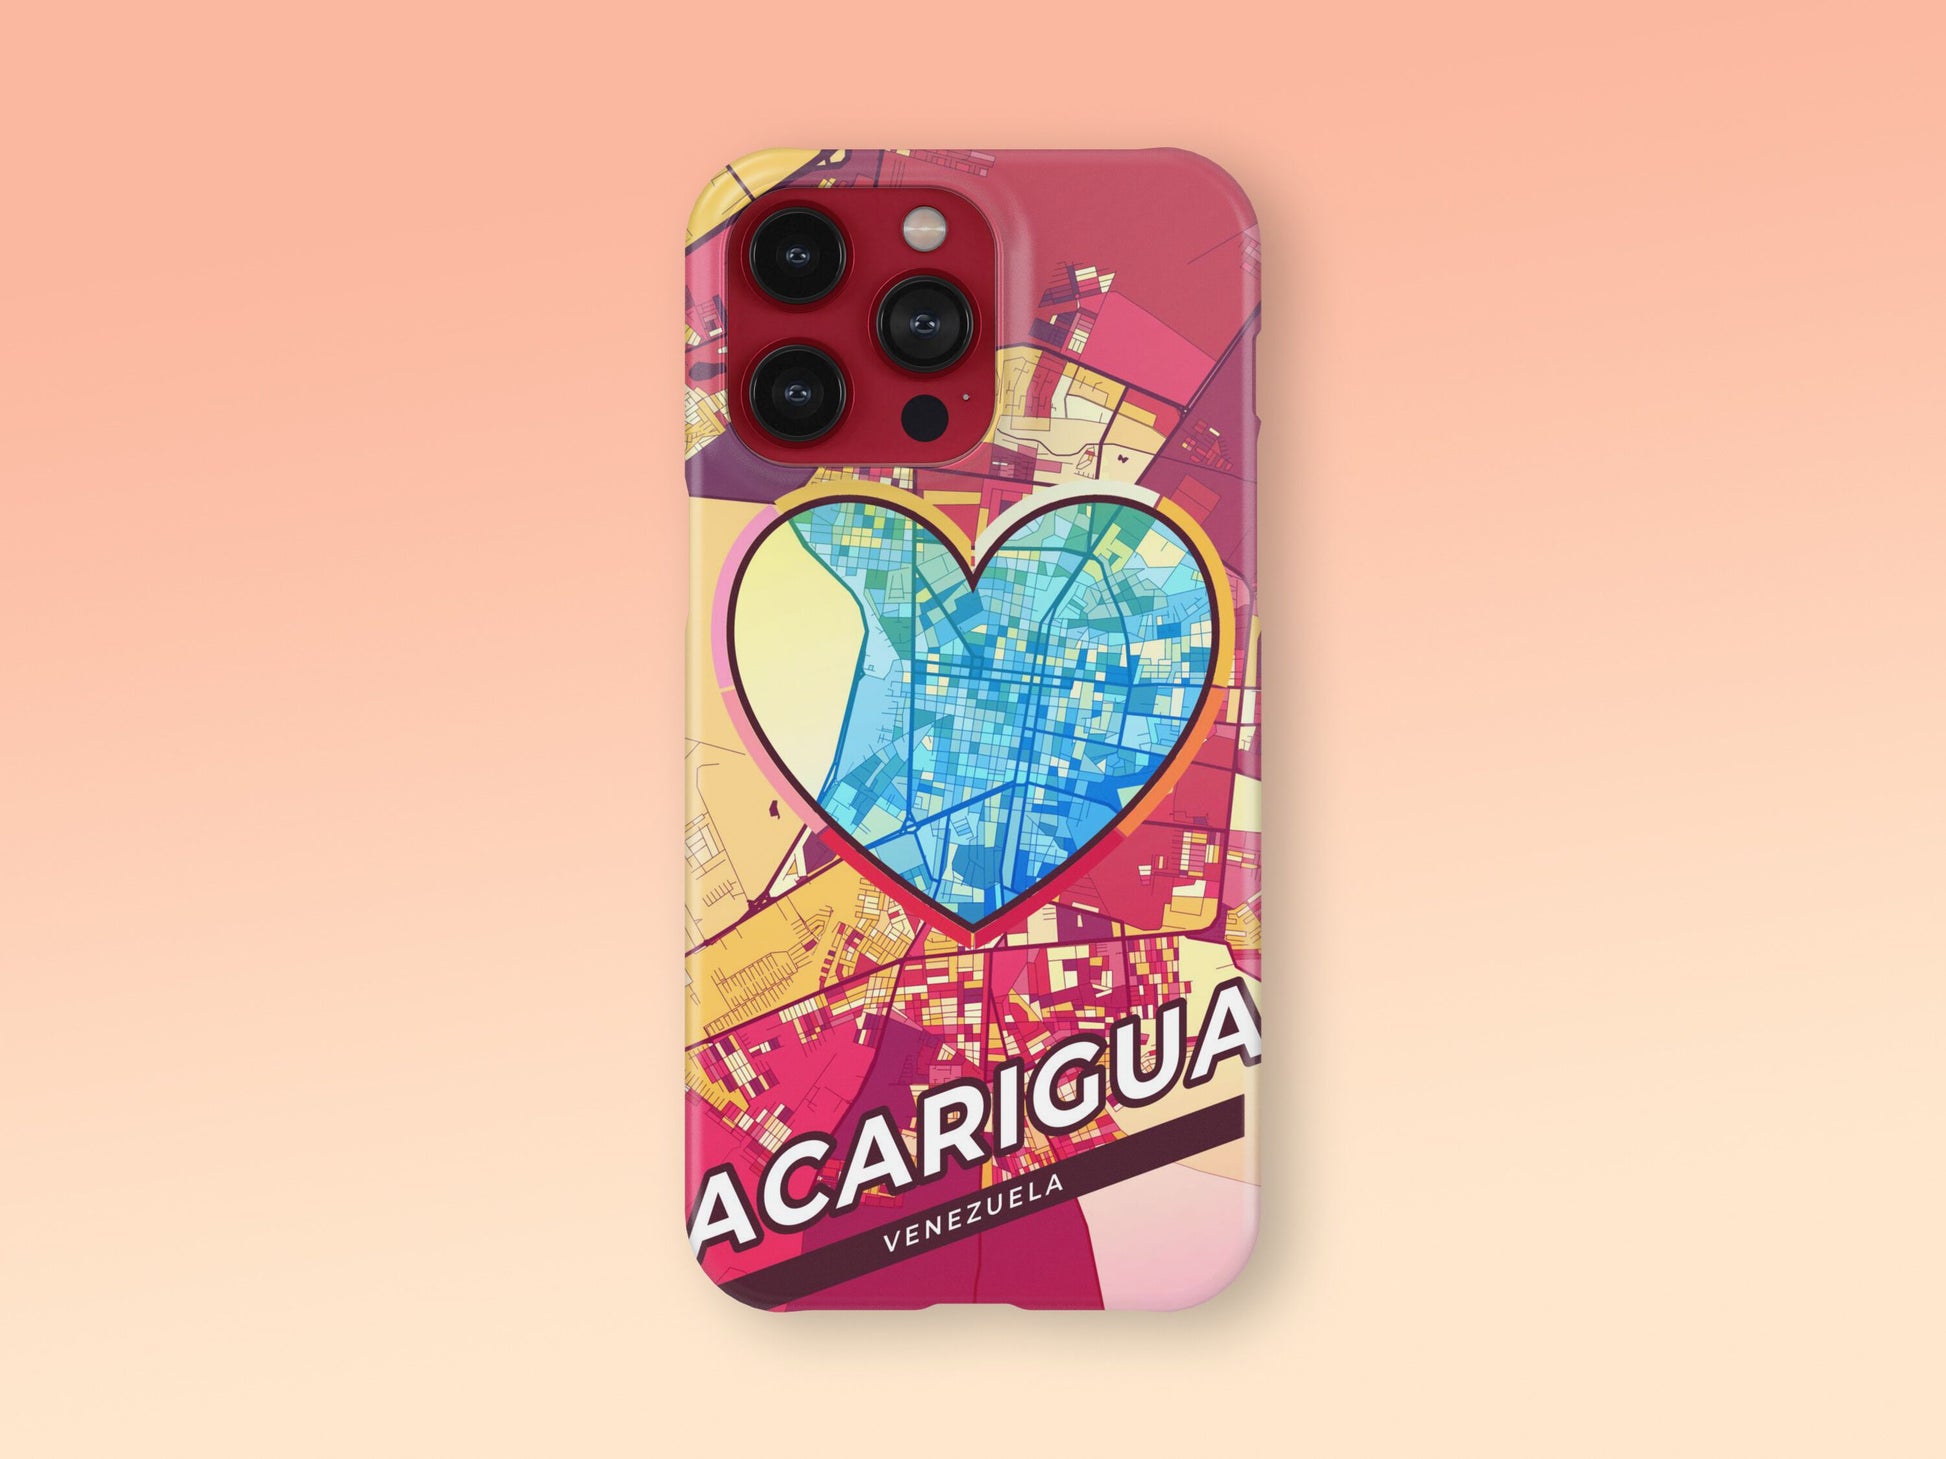 Acarigua Venezuela slim phone case with colorful icon. Birthday, wedding or housewarming gift. Couple match cases. 2